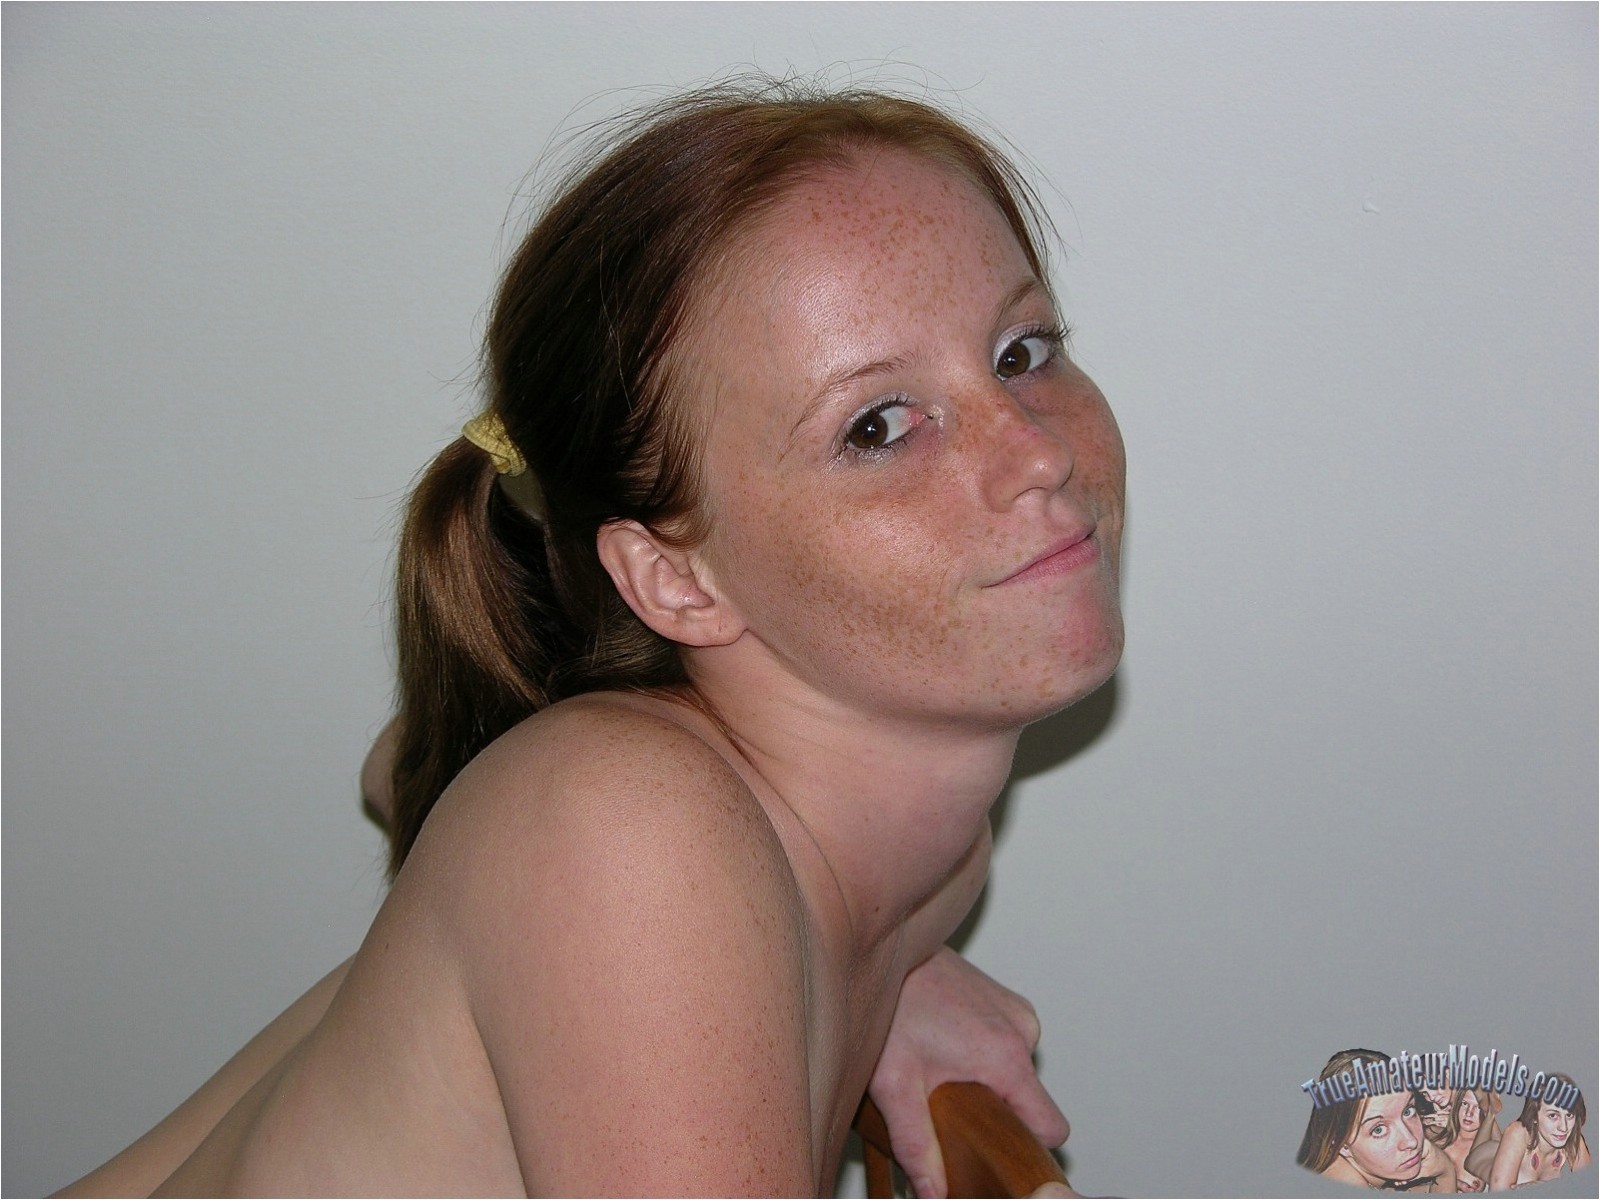 Amateur Freckled Face Petite Teen Modeling Nude  - True Amateur Models #67097878